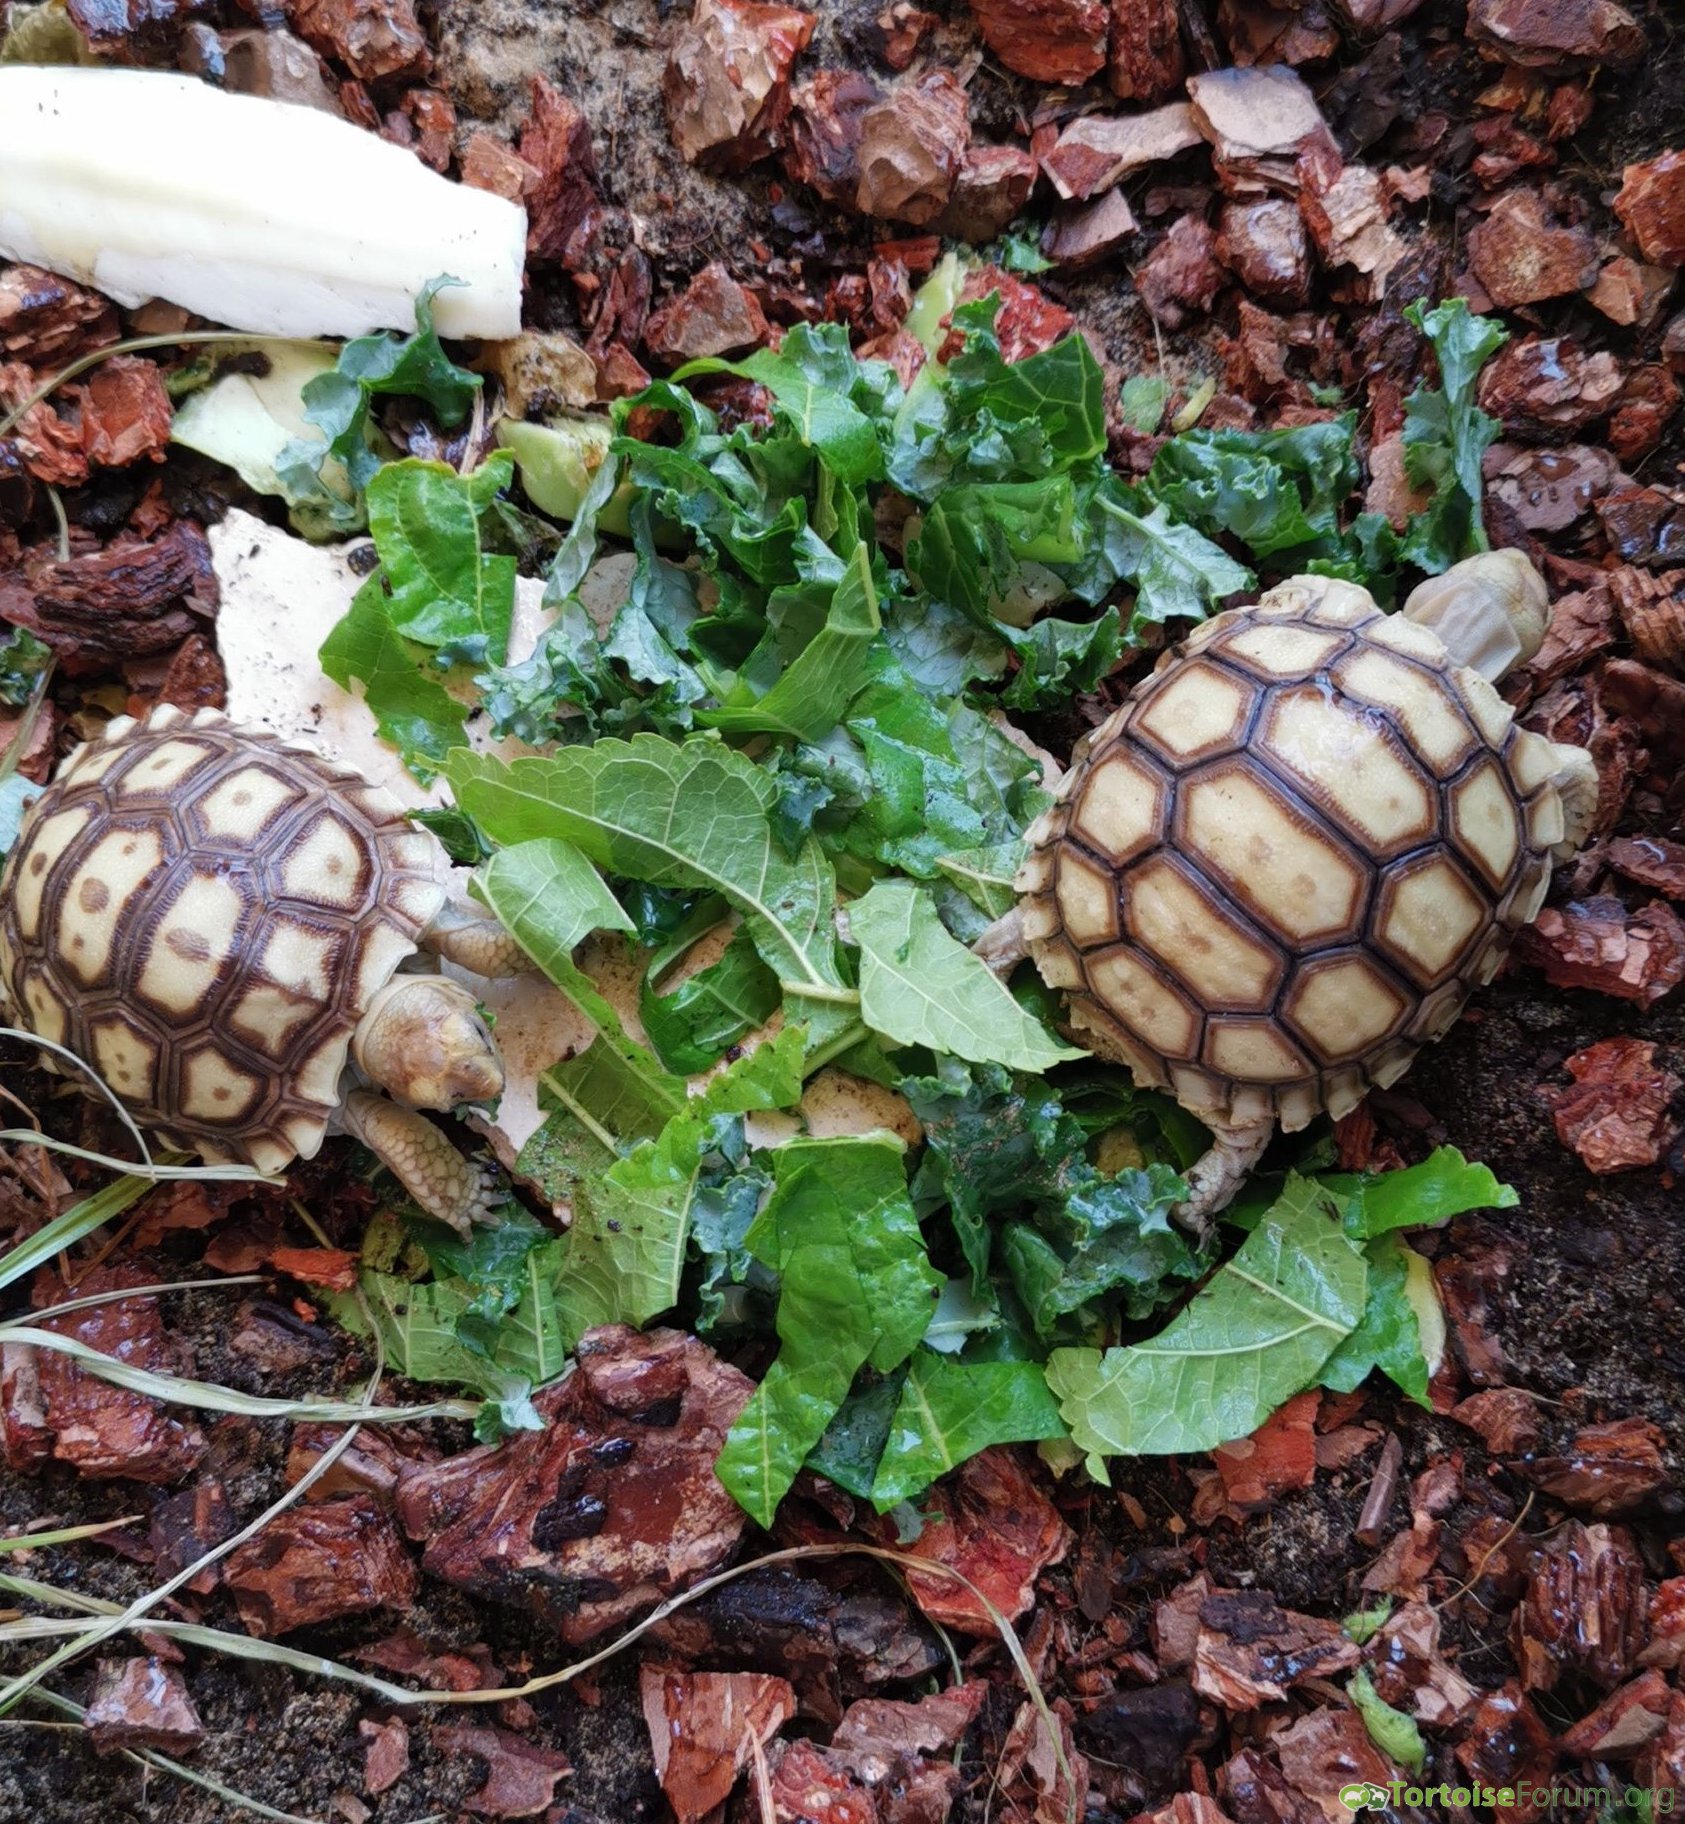 My two baby Sulcata tortoise.